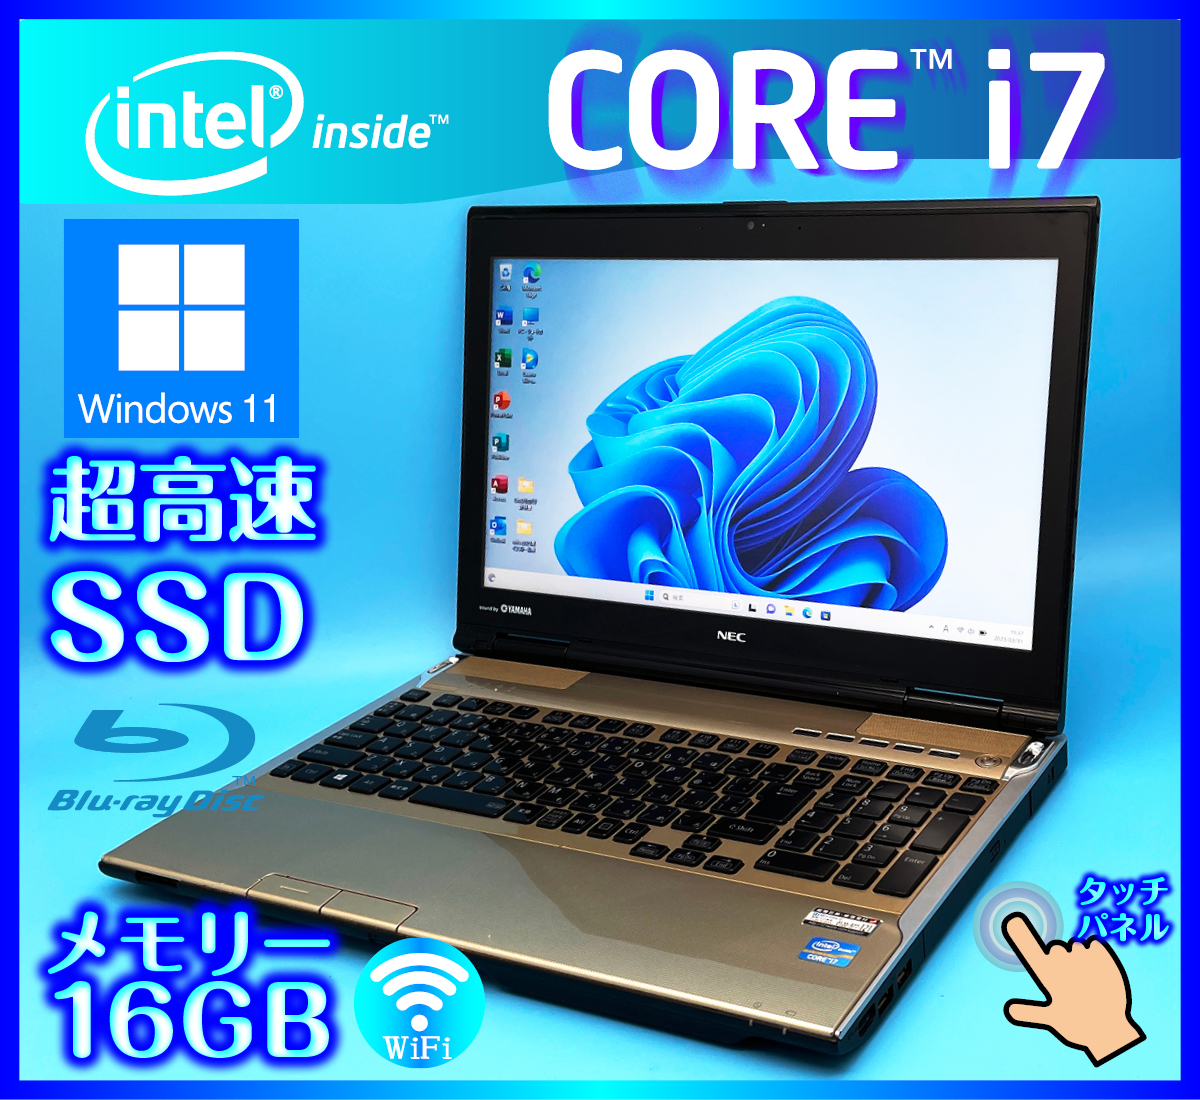 NEC タッチパネル Core i7 大容量メモリ 16GB 搭載 ゴールド【超速SSD新品512GB+HDD1000GB】Windows 11 3630QM Lavie Office2021 LL750/J